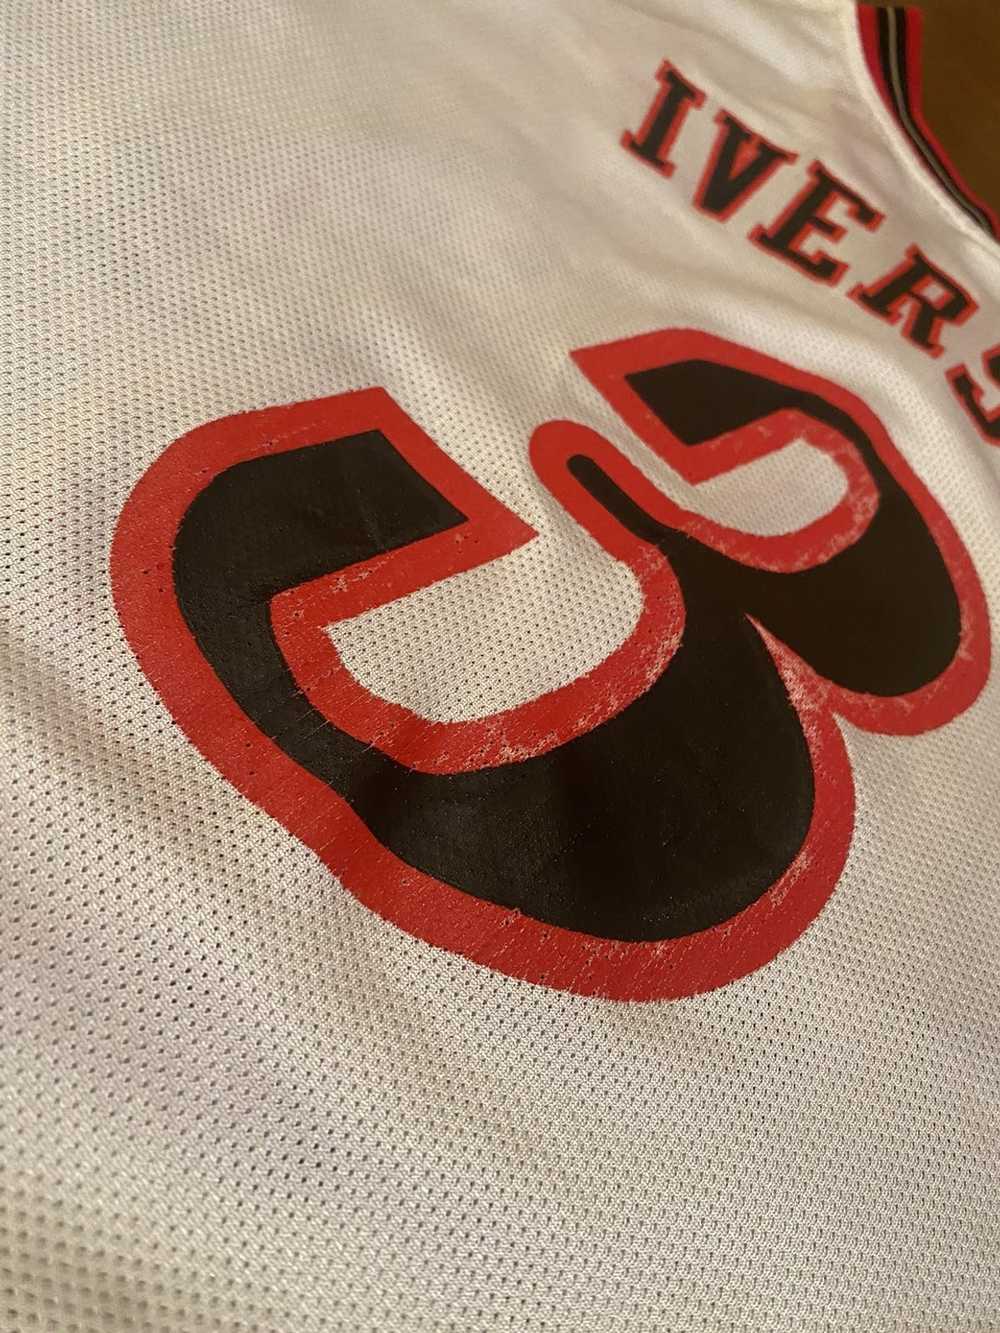 NBA × Reebok × Vintage Allen Iverson 76ers jersey - image 4